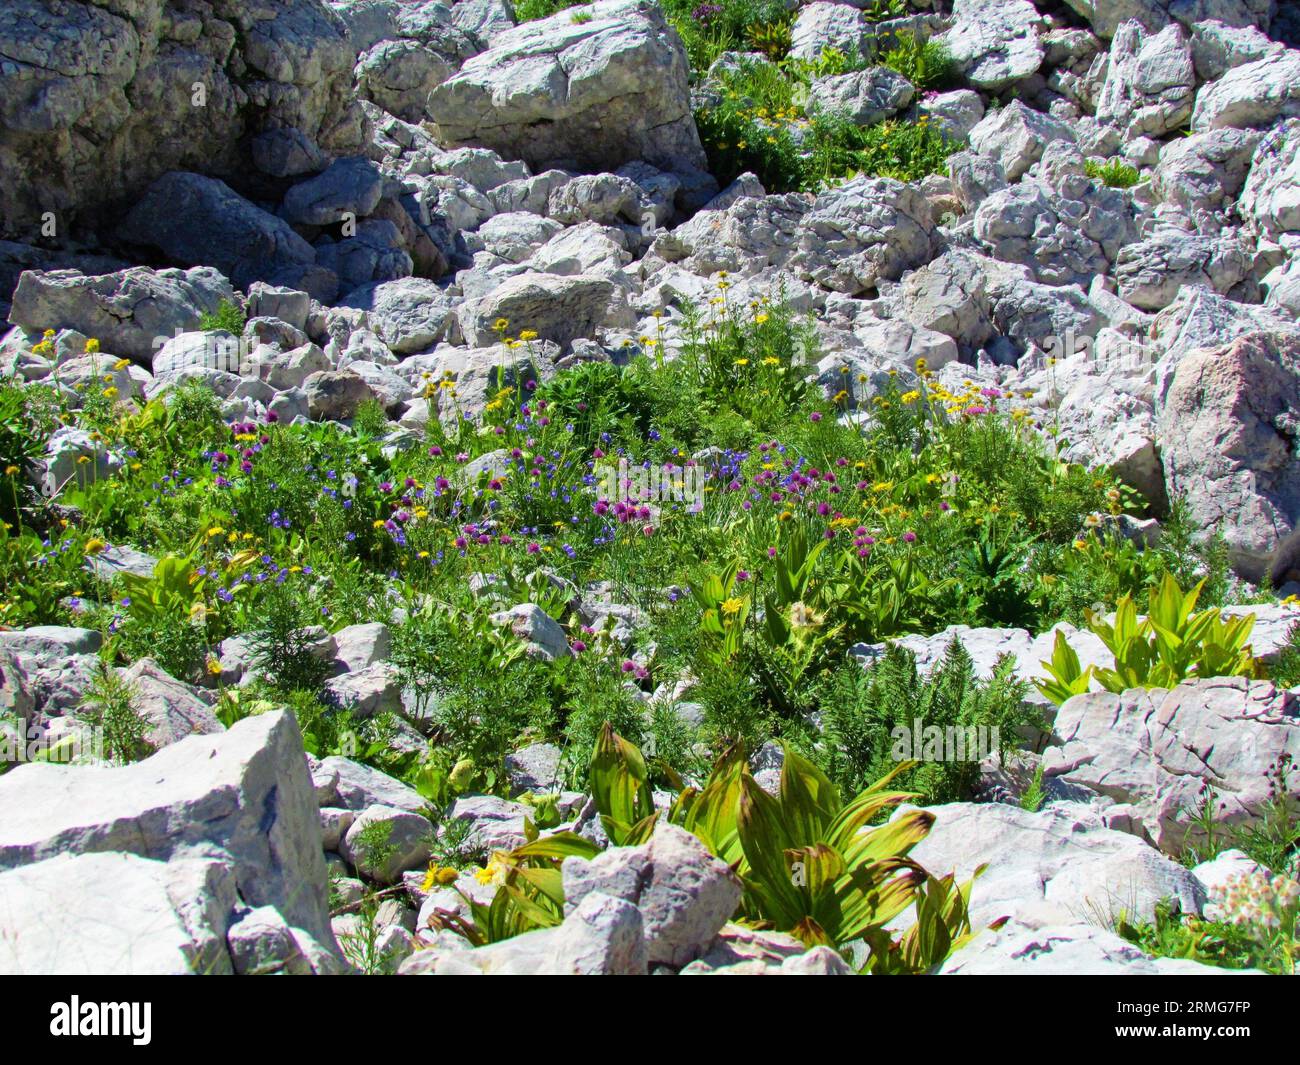 Alpine rock garden of blue earleaf bellflower or fairy's-thimble (Campanula cochleariifolia), yellow leopard's bane (Doronicum grandiflorum) and pink Stock Photo